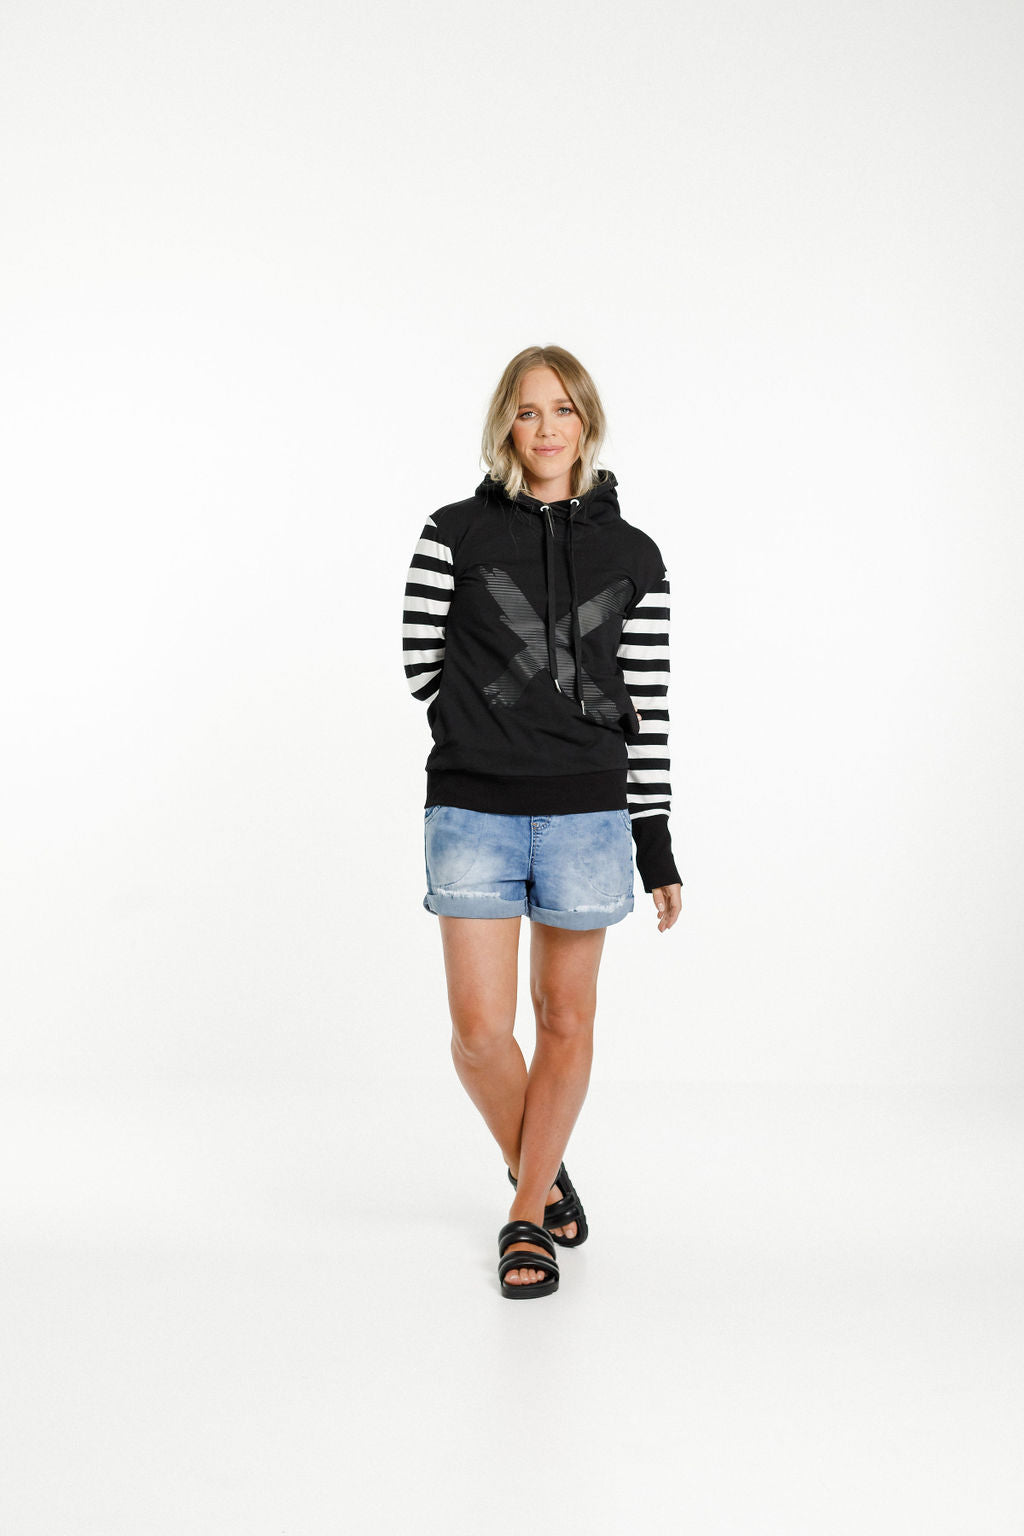 Hooded Sweatshirt - Black with Black & White stripe sleeves and X print